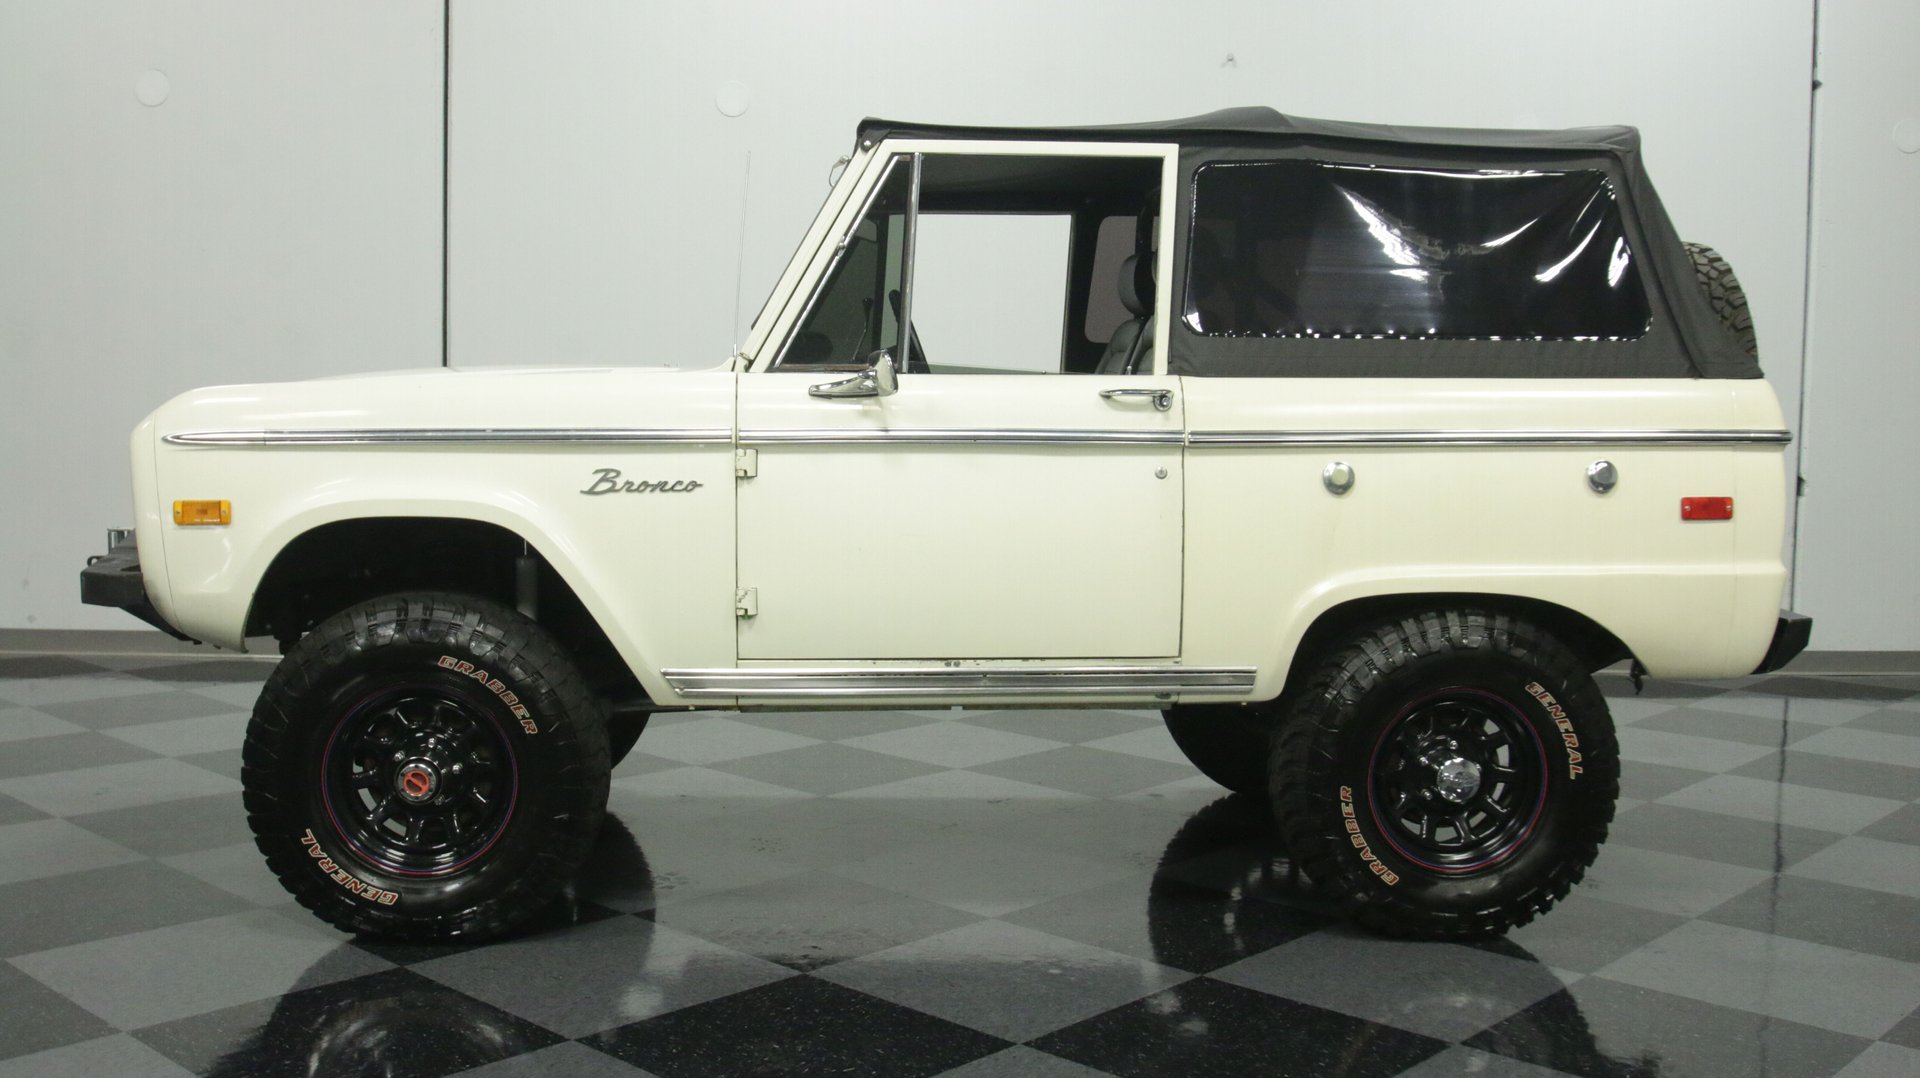 1974 ford bronco 4x4